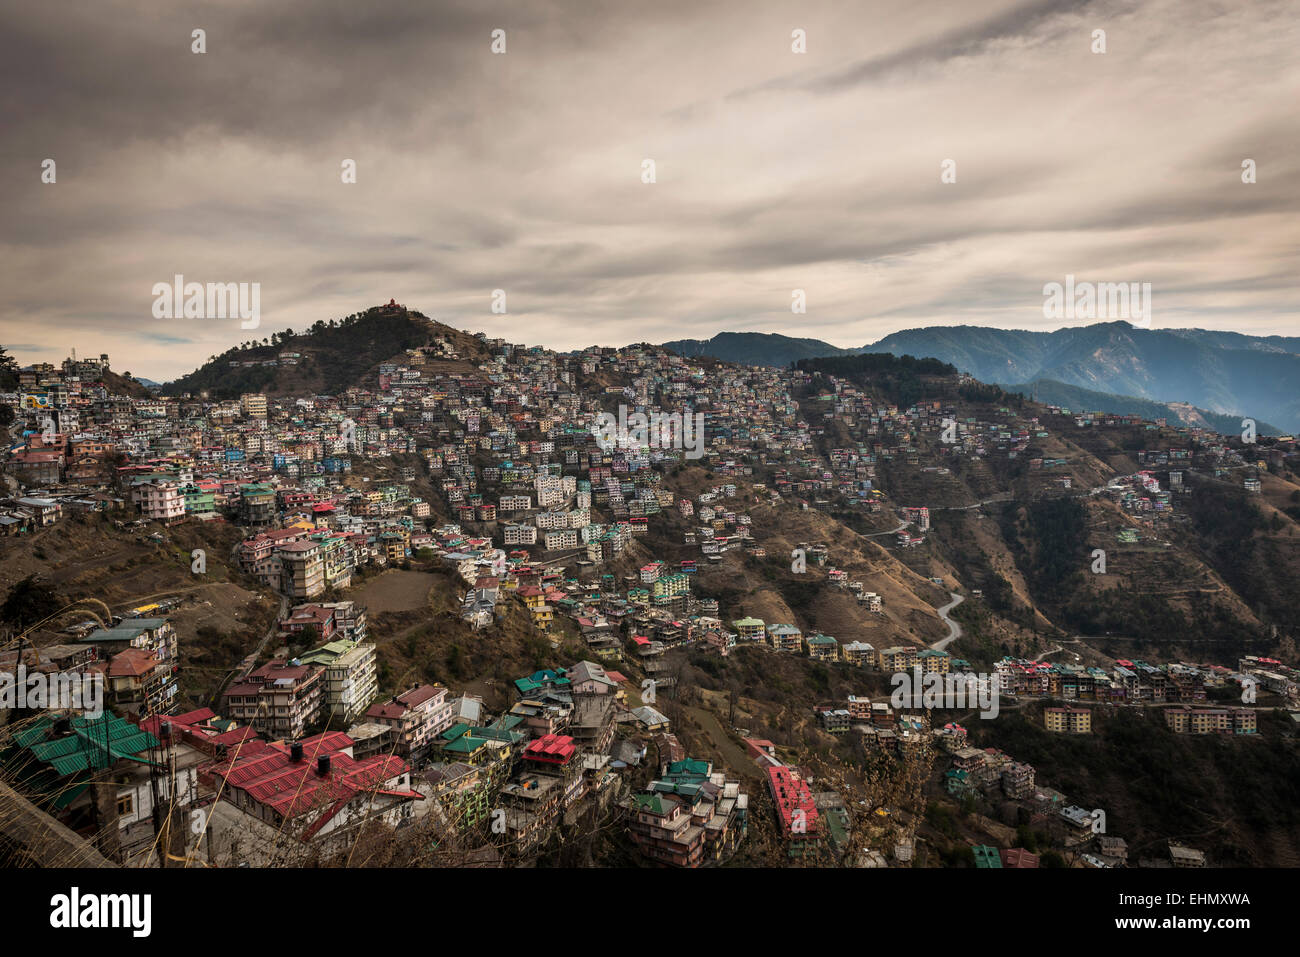 Urban sprawl in the Himalayan foothills in the Shimla district, Himachal Pradesh, India Stock Photo